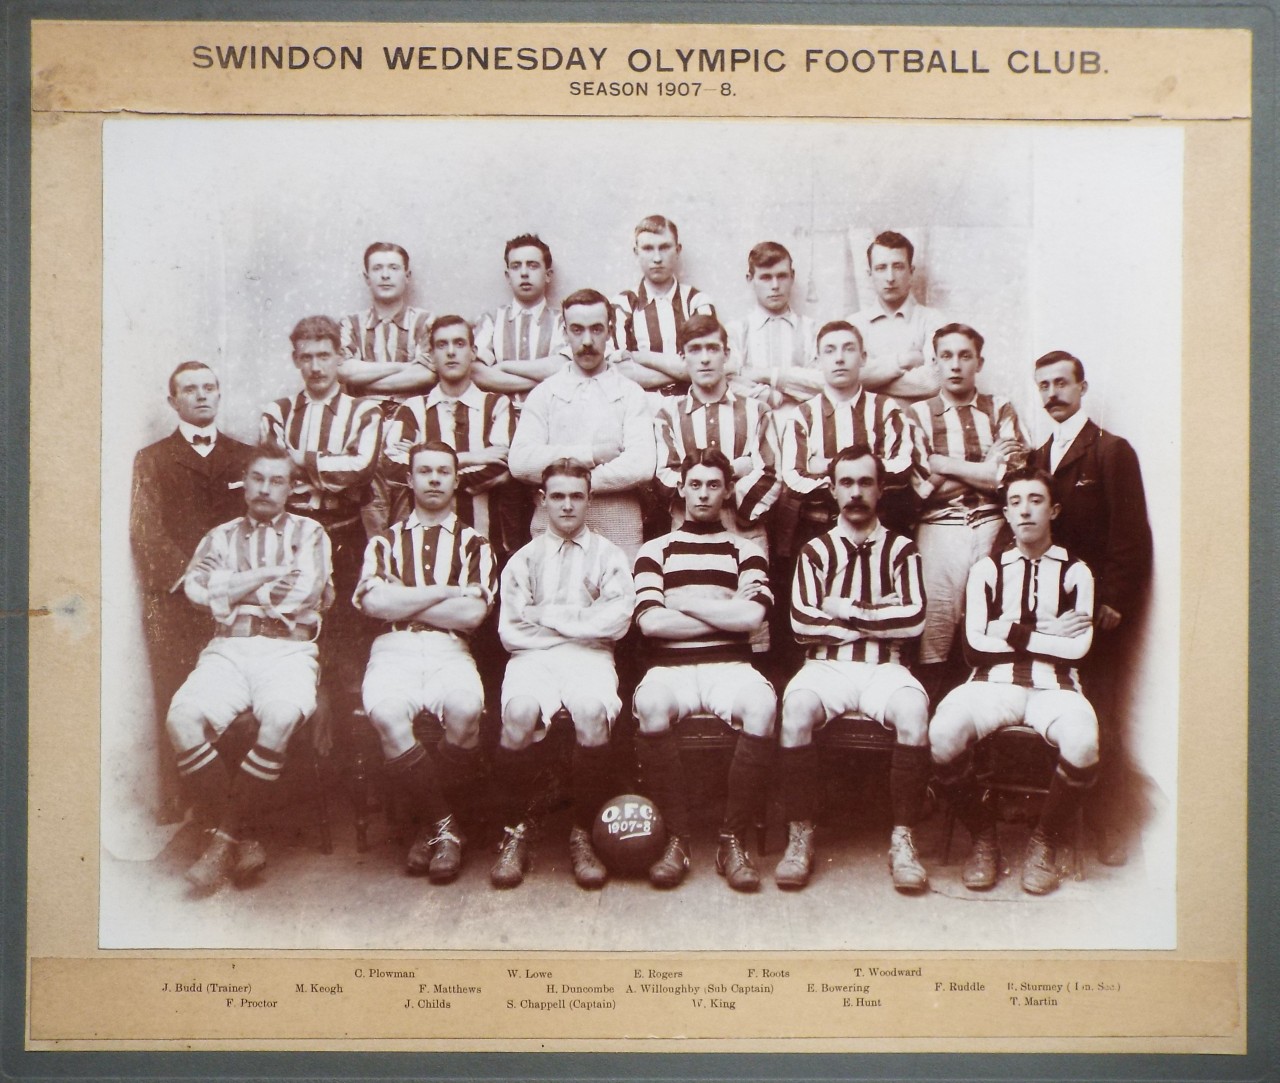 Photograph - Swindon Wednesday Olympic Football Club. Season 1907-8.